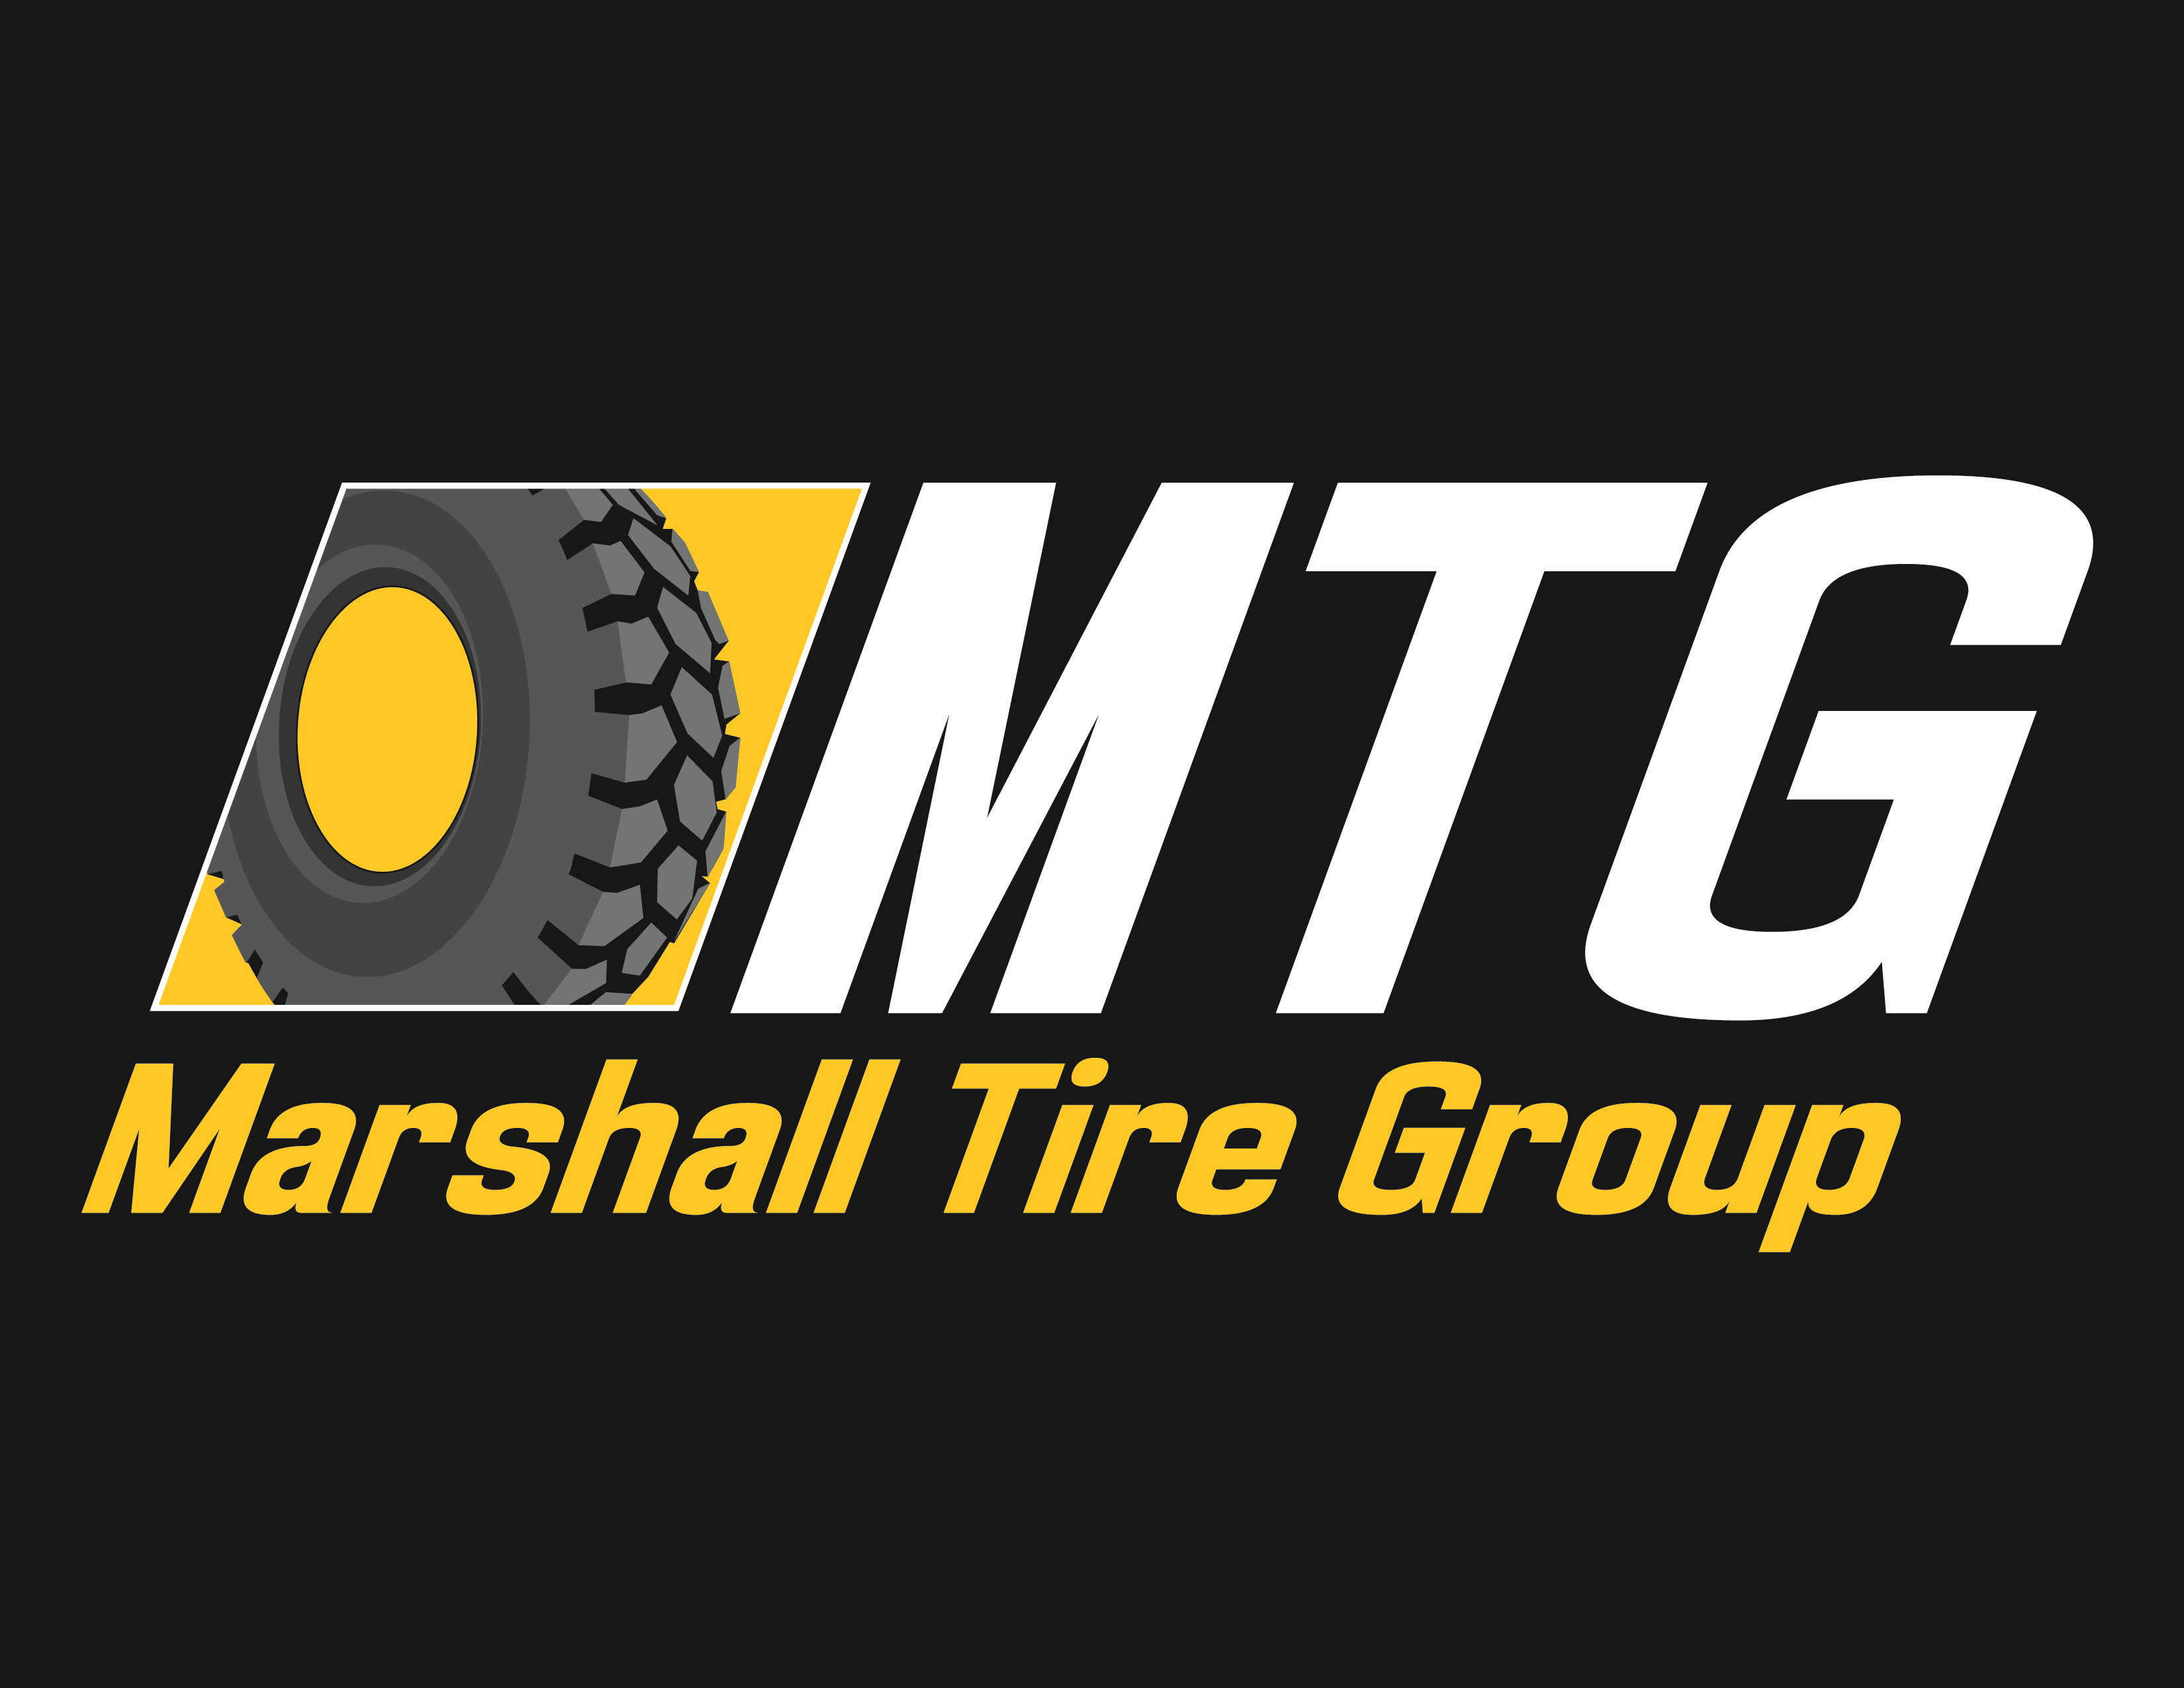 Marshall Tire Group, Inc.